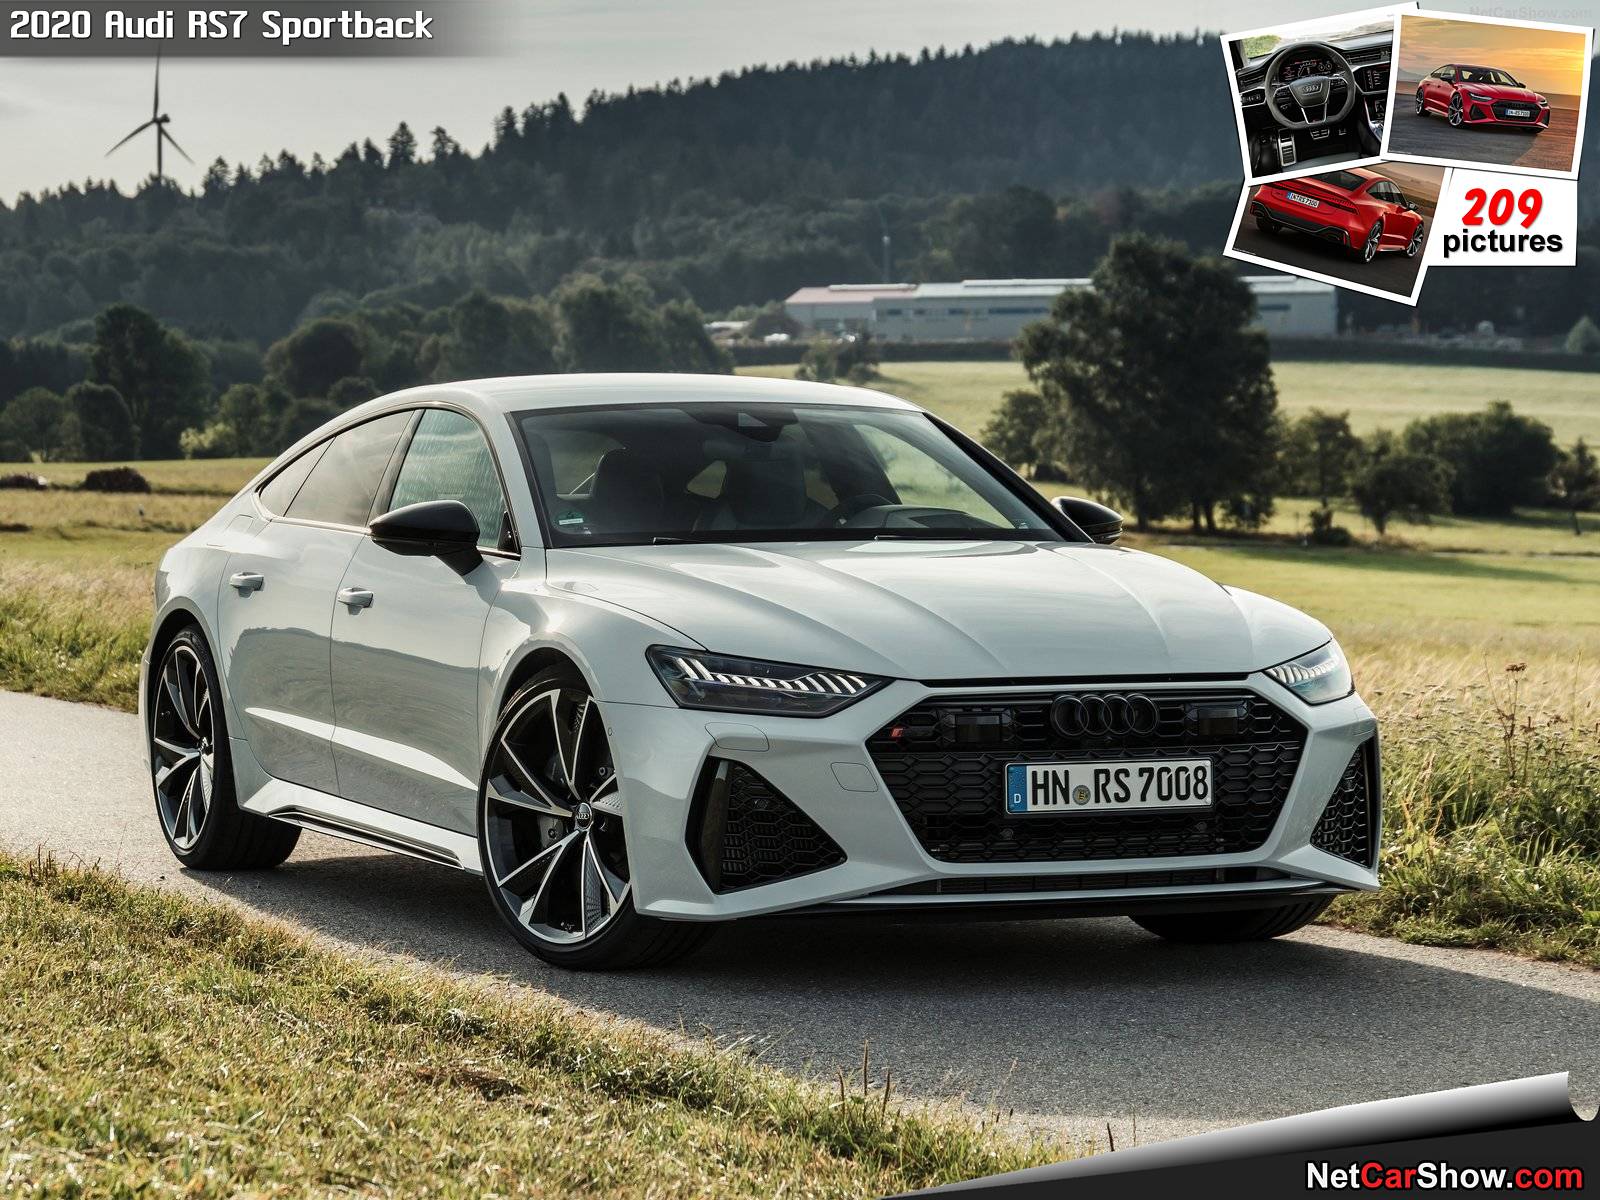 Audi RS7 Sportback (2020), information & specs